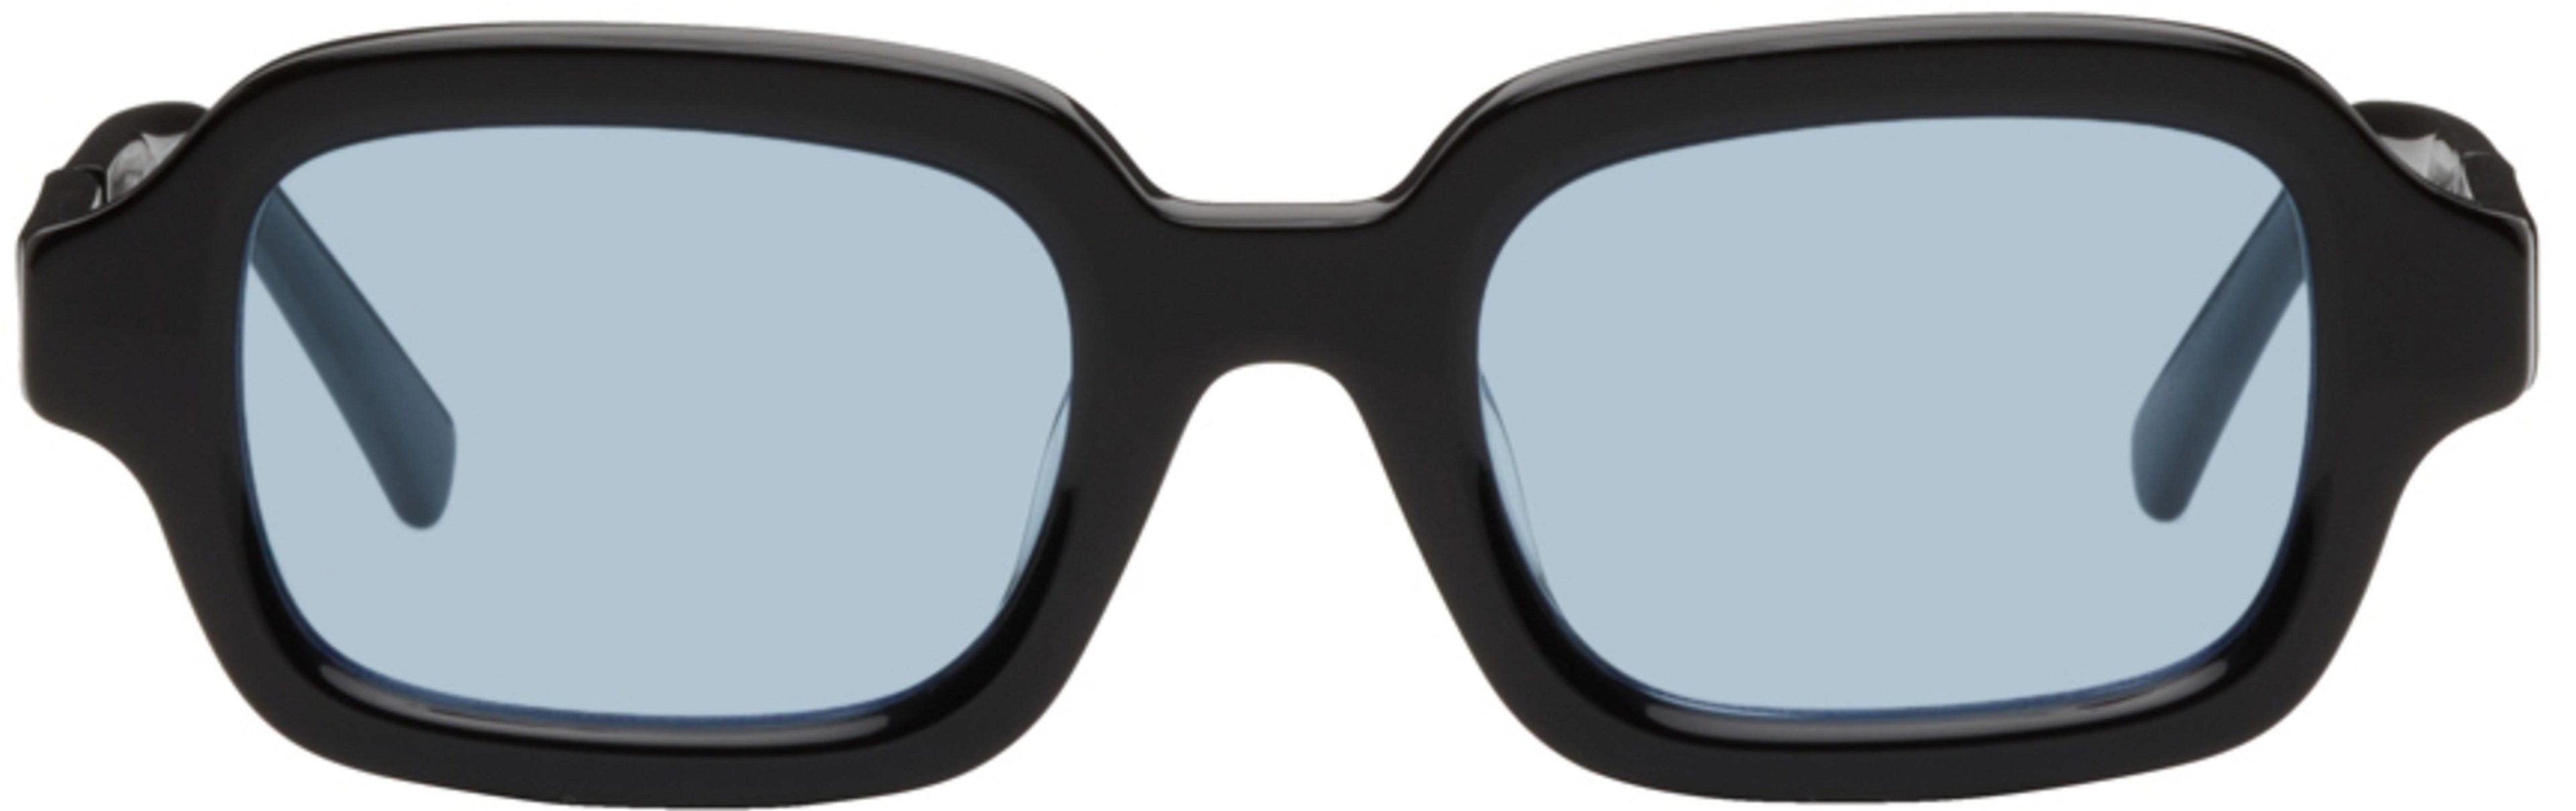 Black & Blue Shy Guy Sunglasses by BONNIE CLYDE